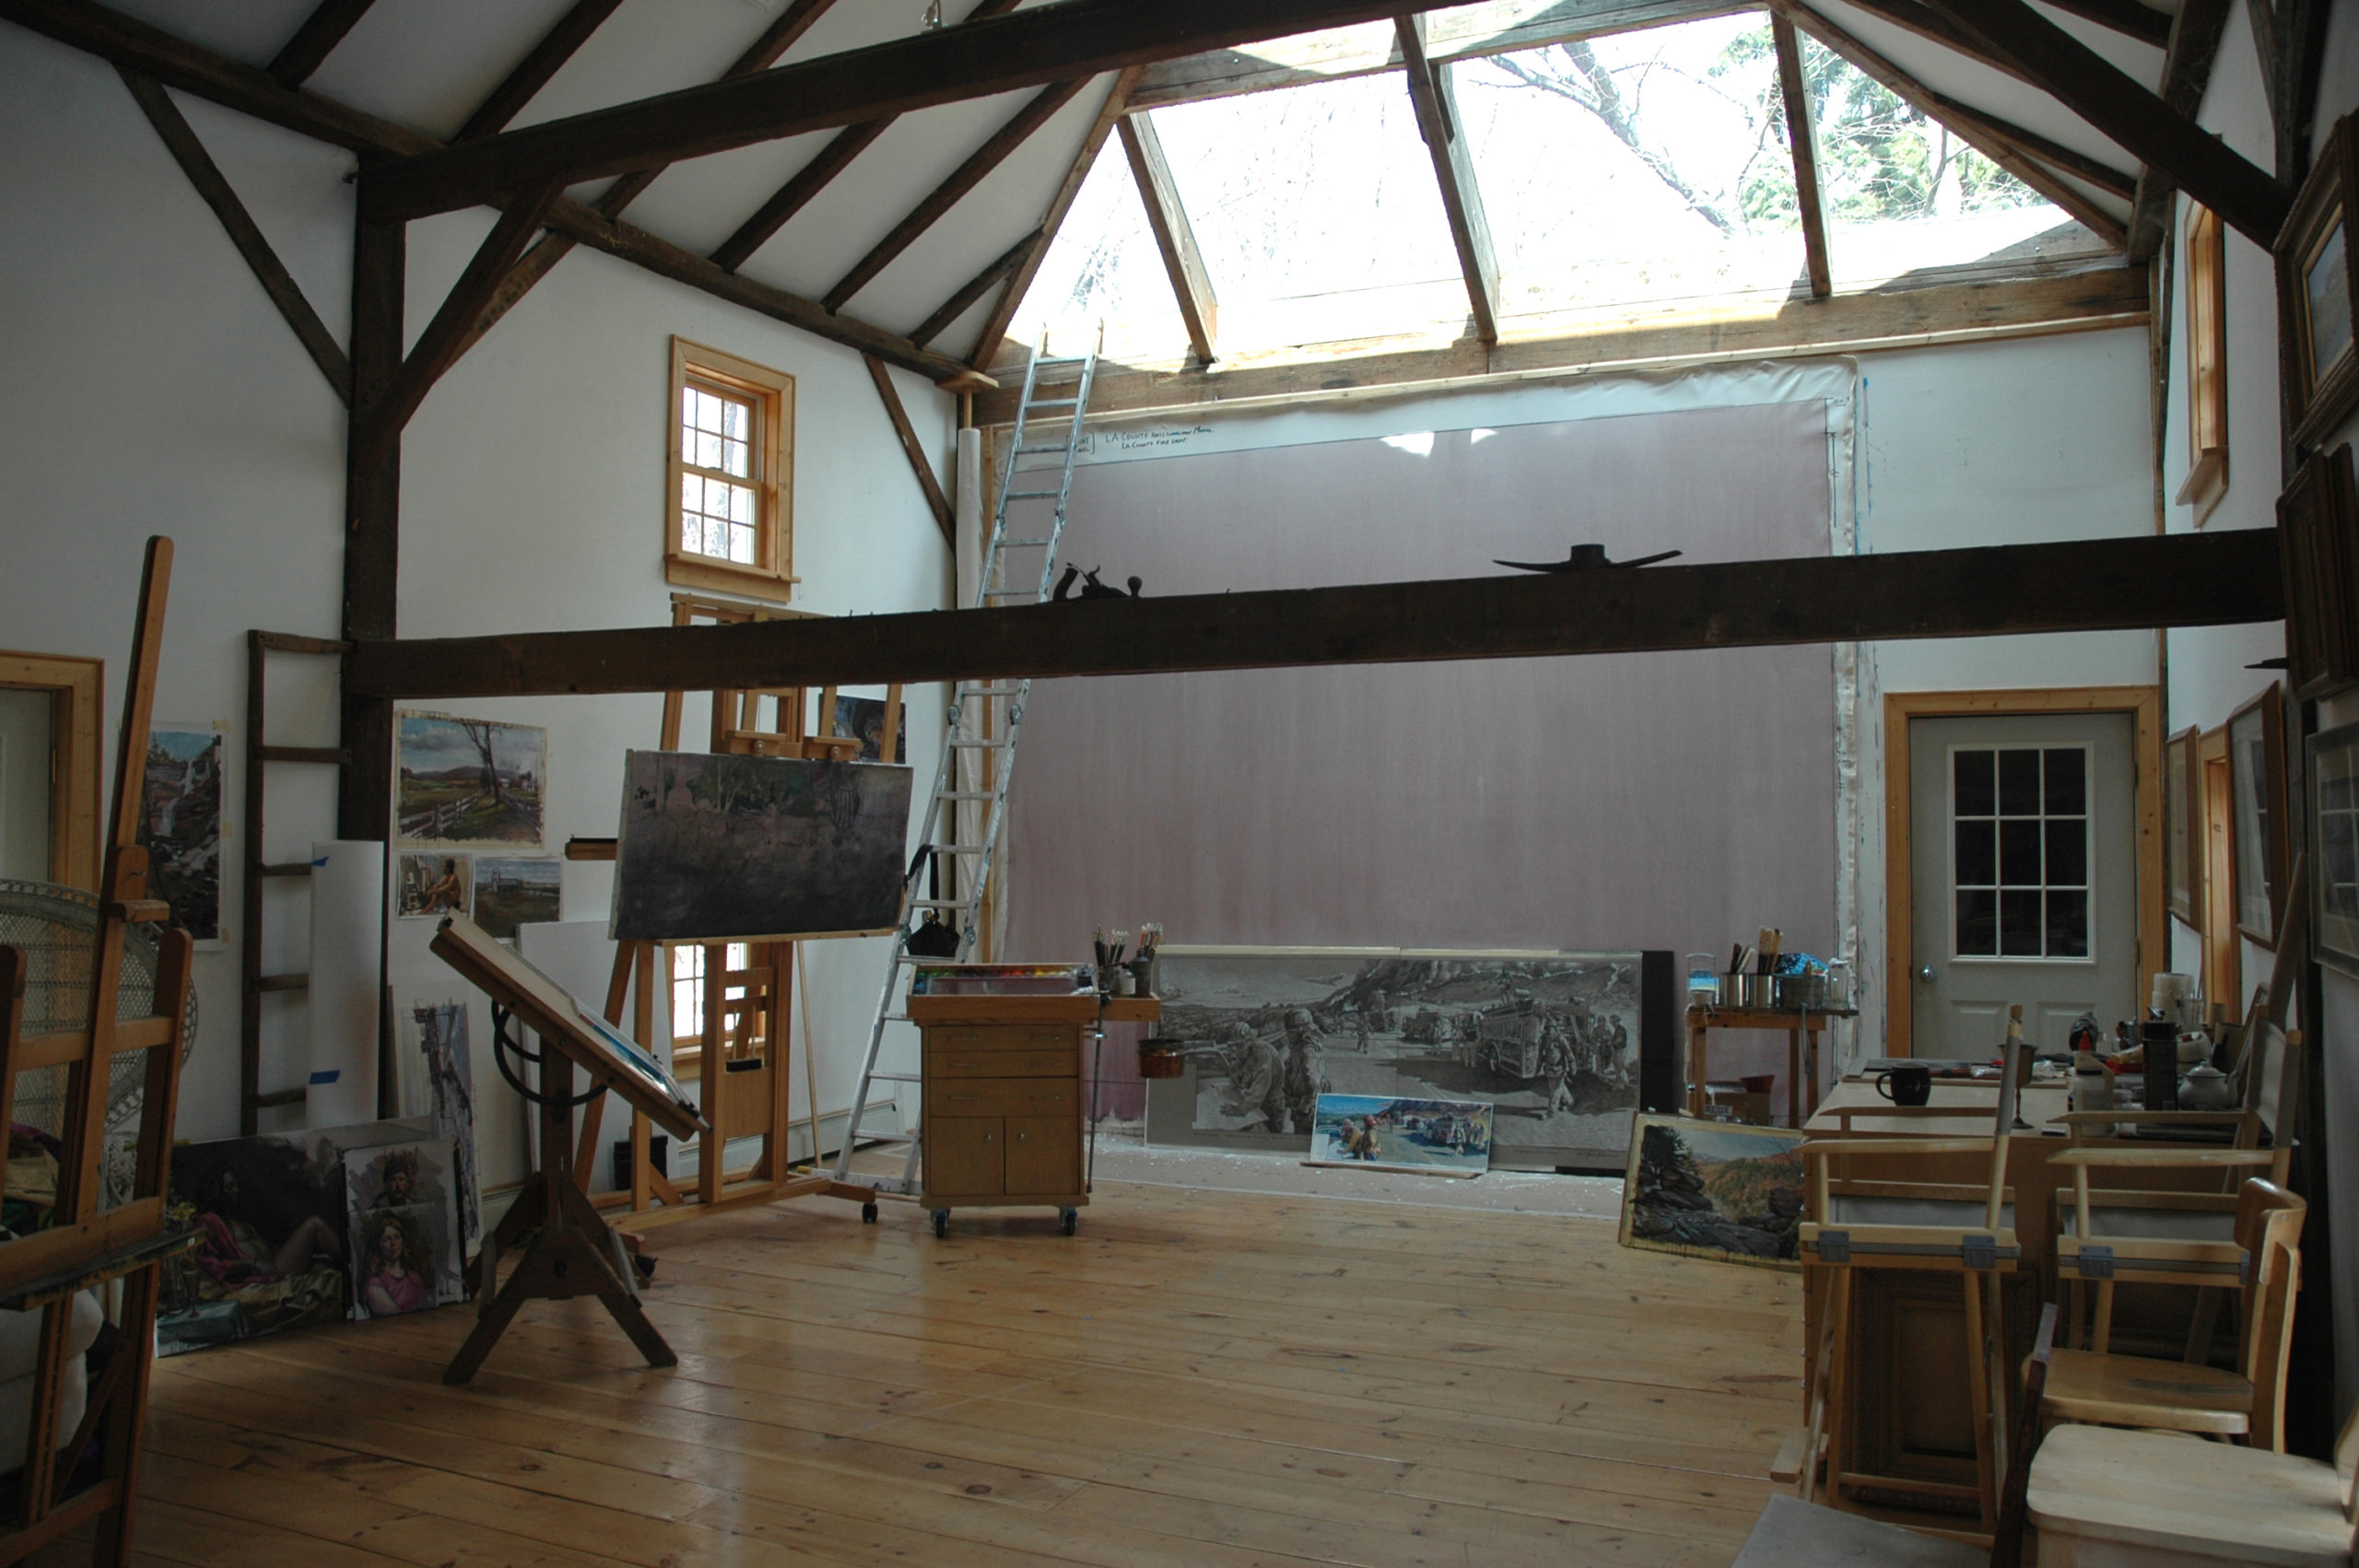 Photo of a Barn art studio interior